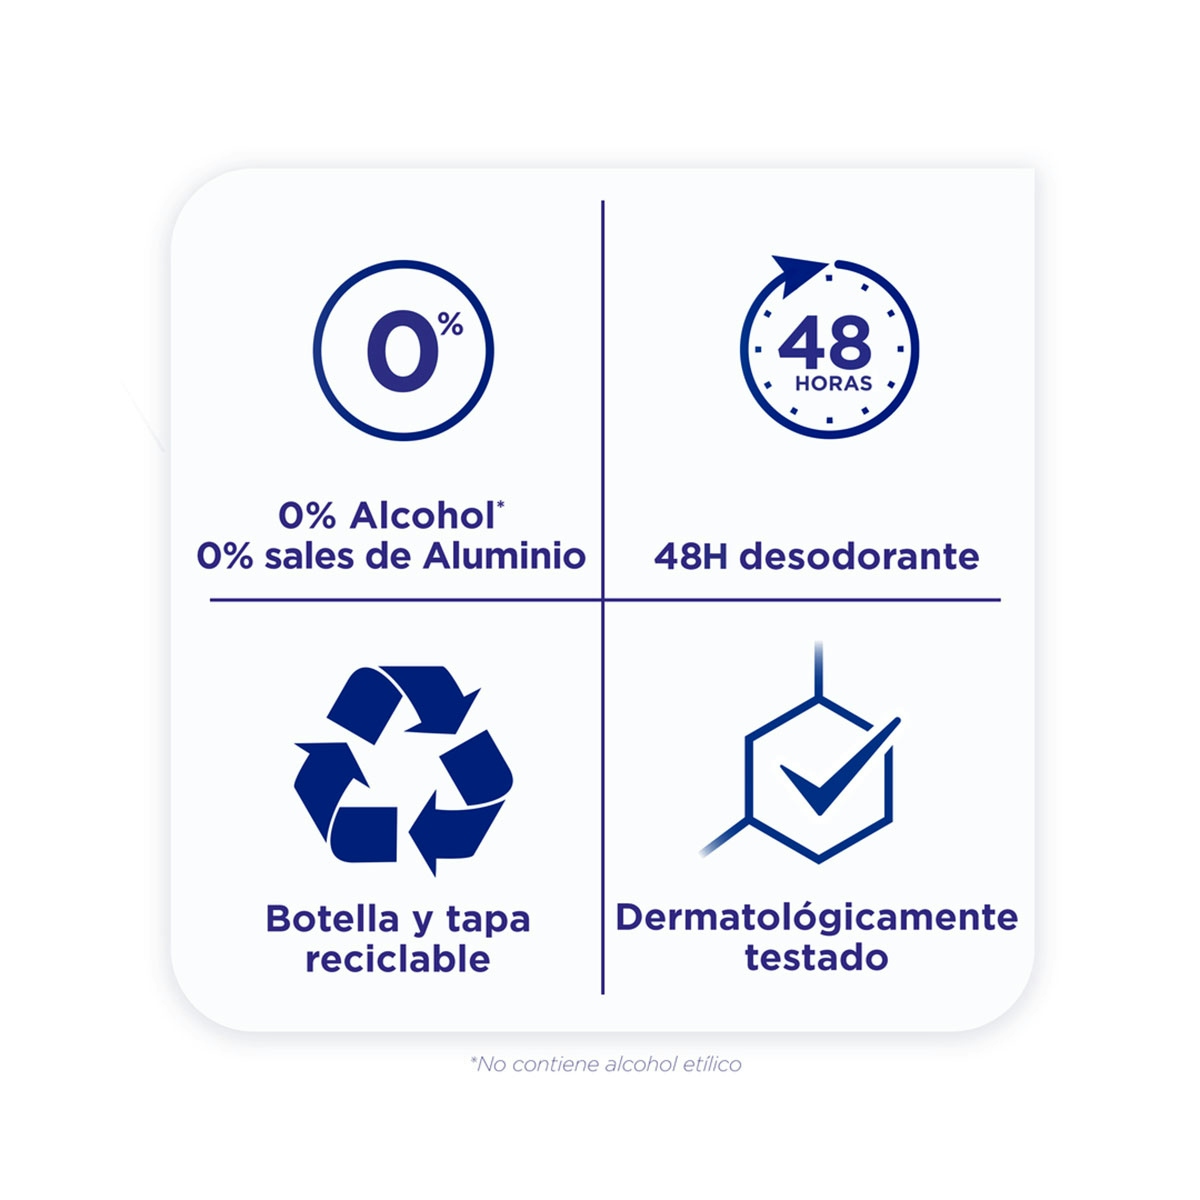 Desodorante roll-on Sanex BiomeProtect Dermo 48h anti-irritation 50ml